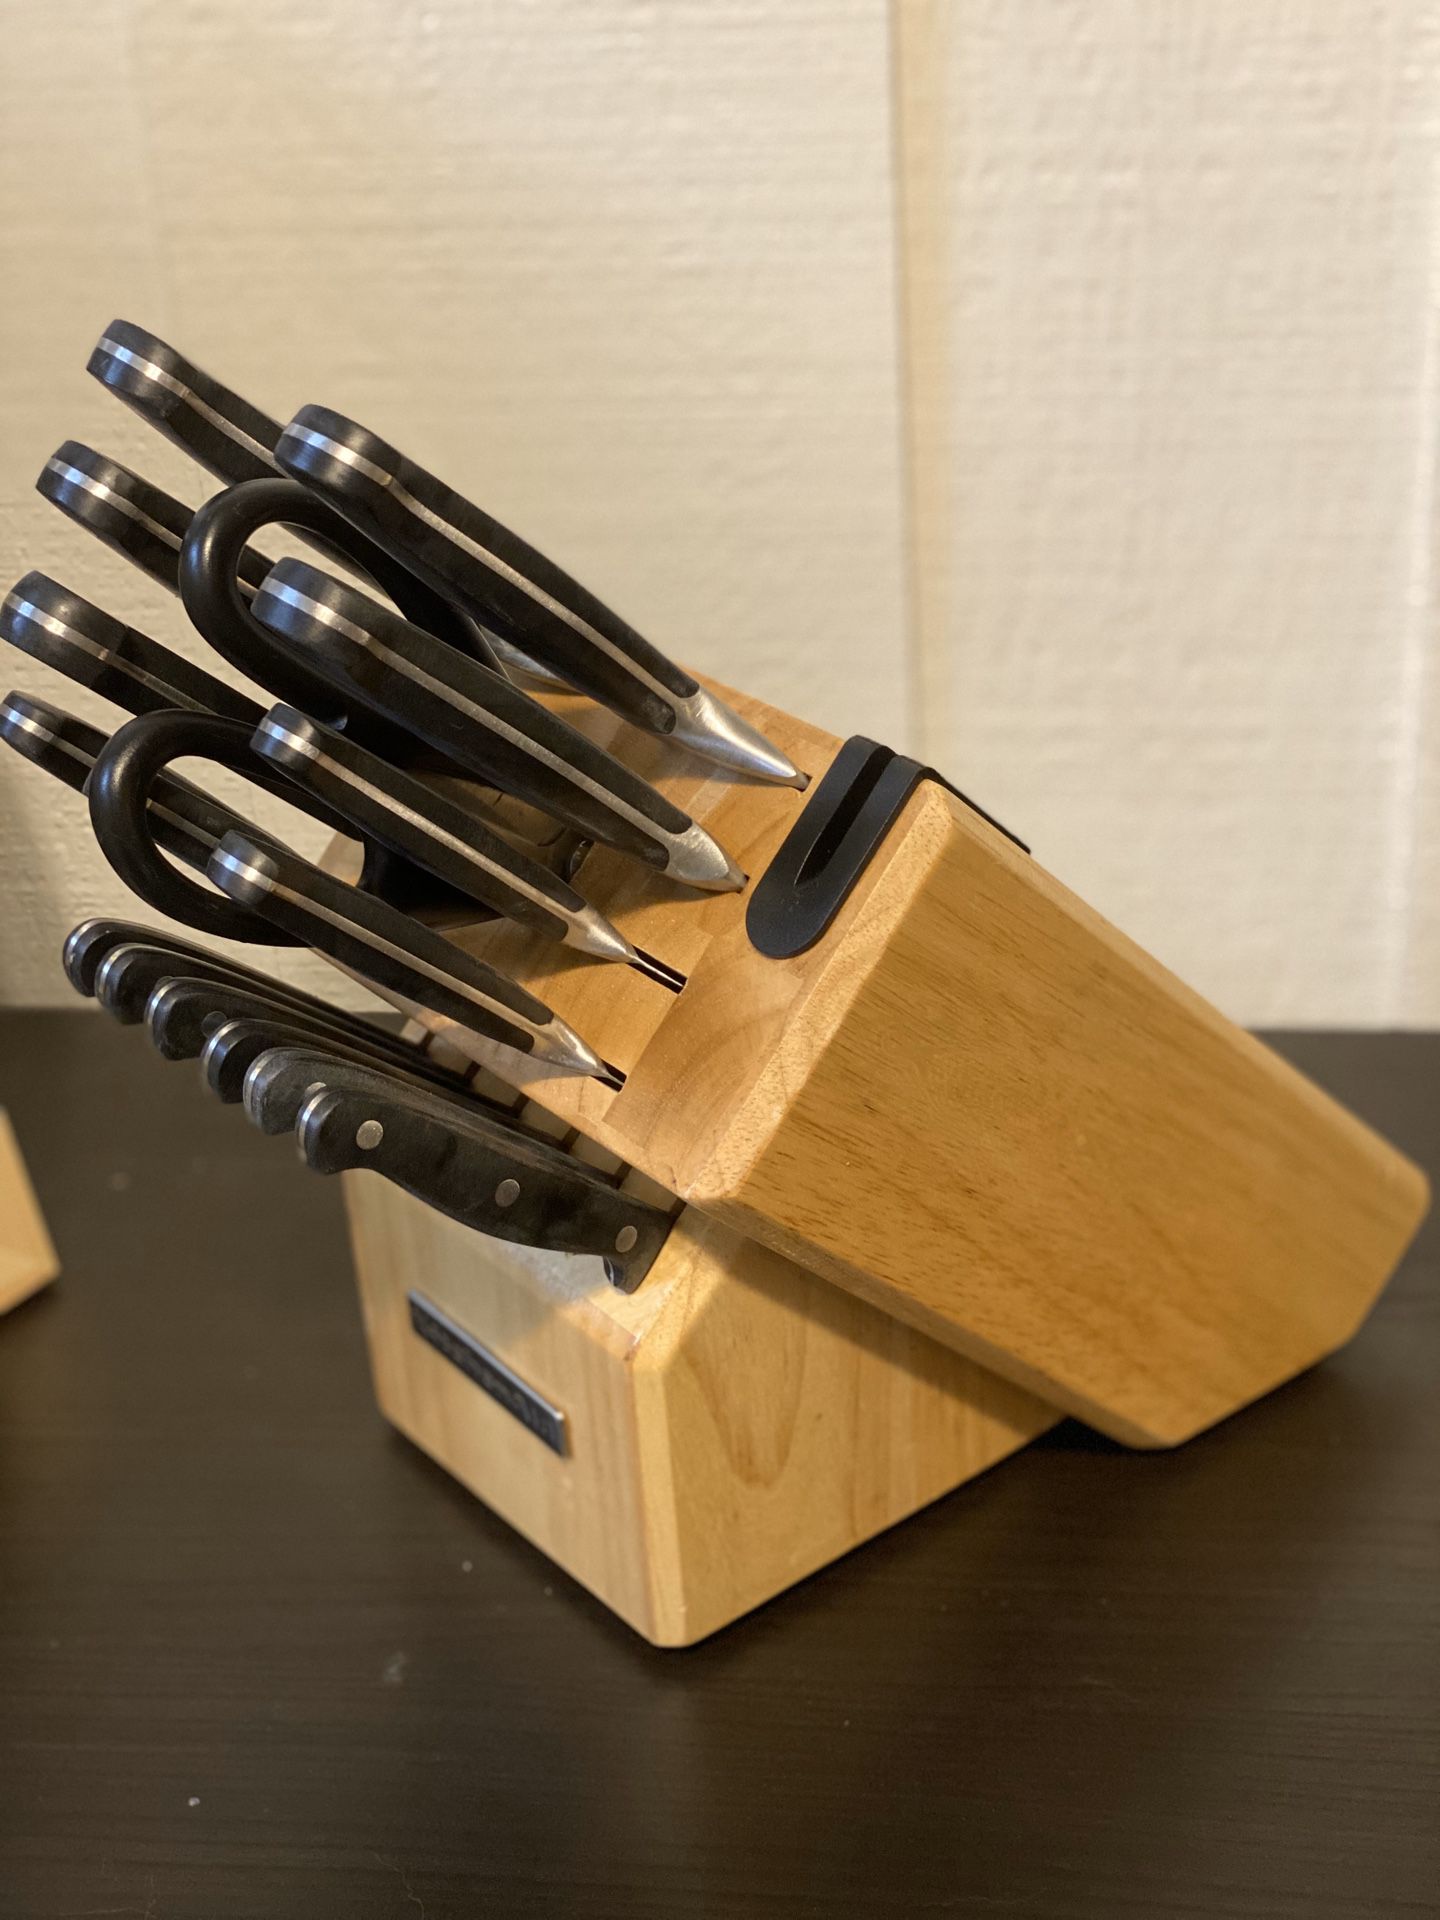 Kitchen Knife Set With Black and Built-in Sharpener